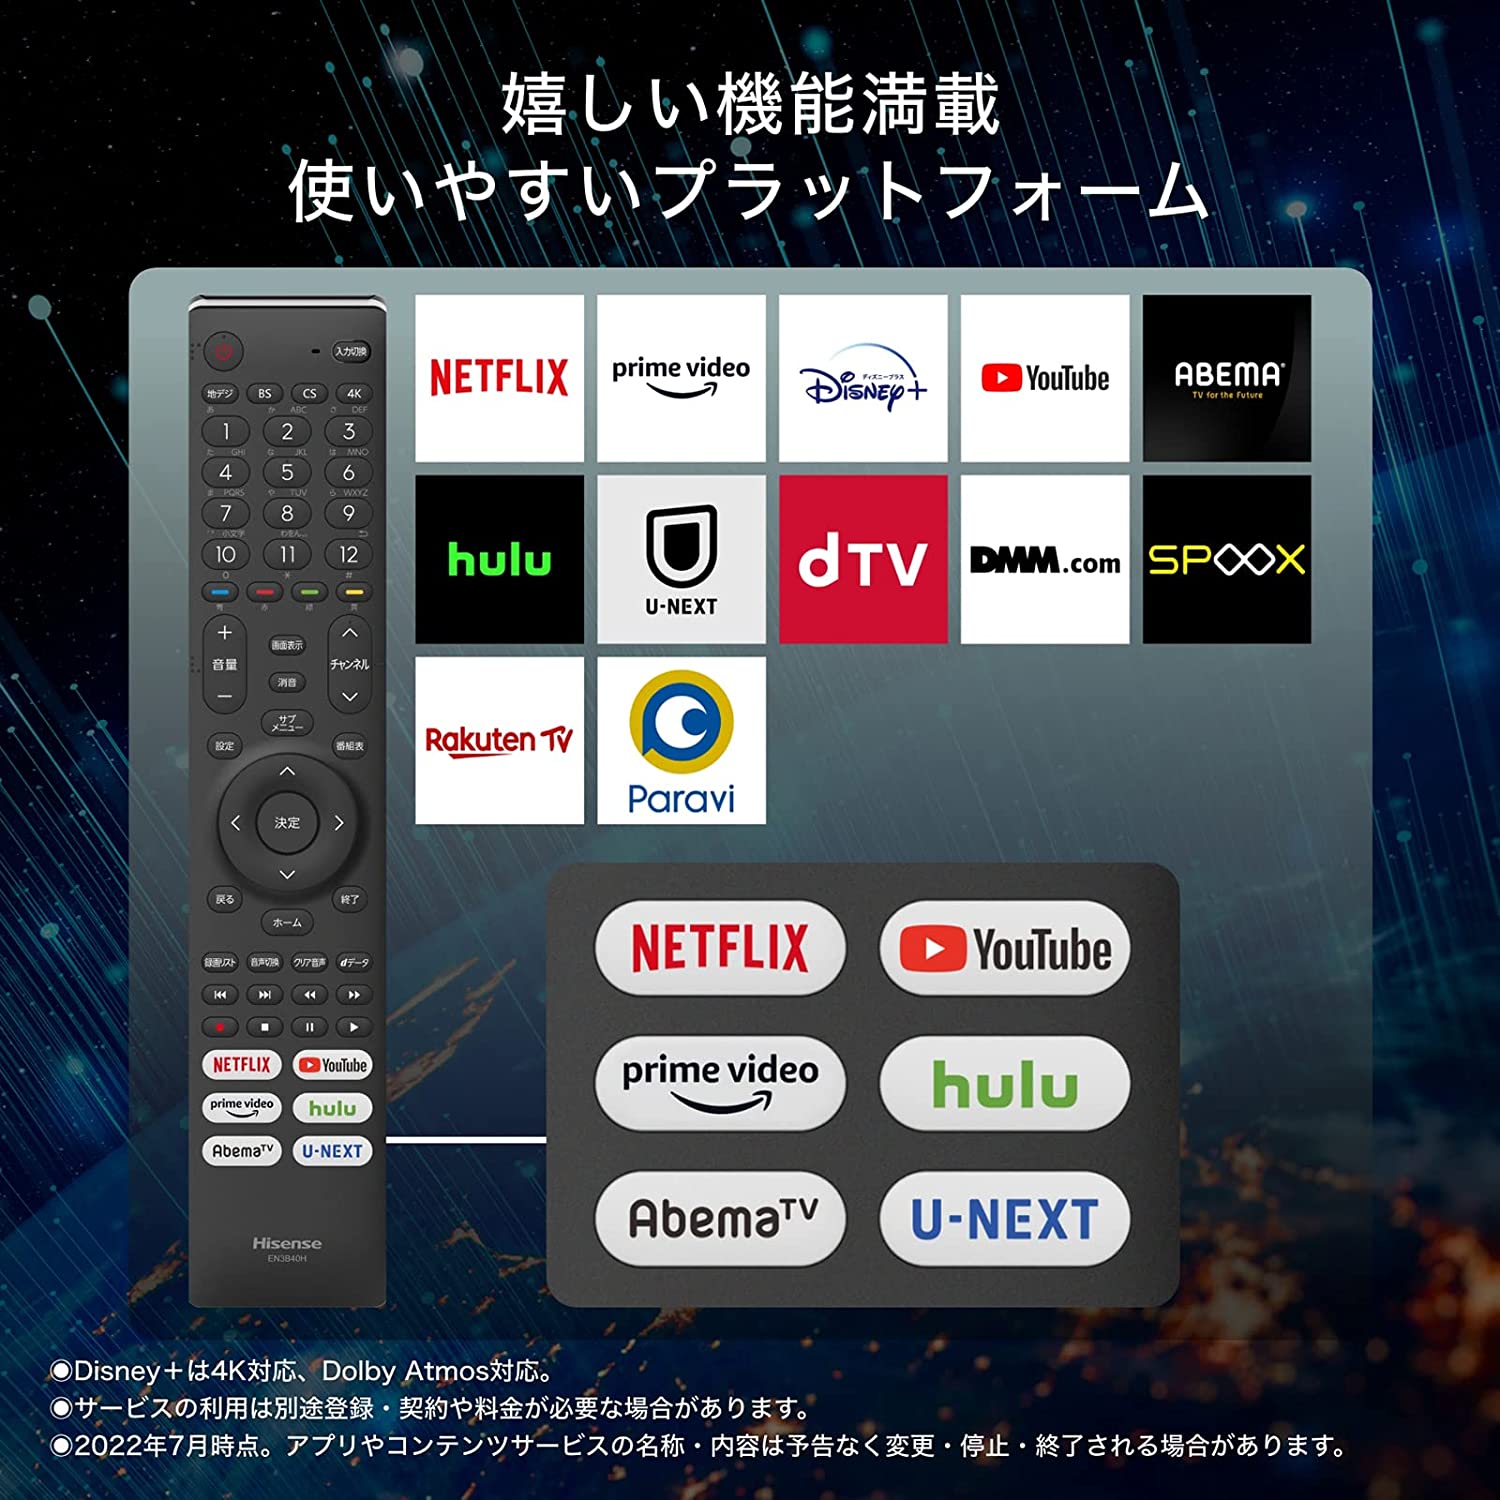 楽天市場】【送料無料】Hisense 50A6H VOD対応 4K液晶テレビ 50V型